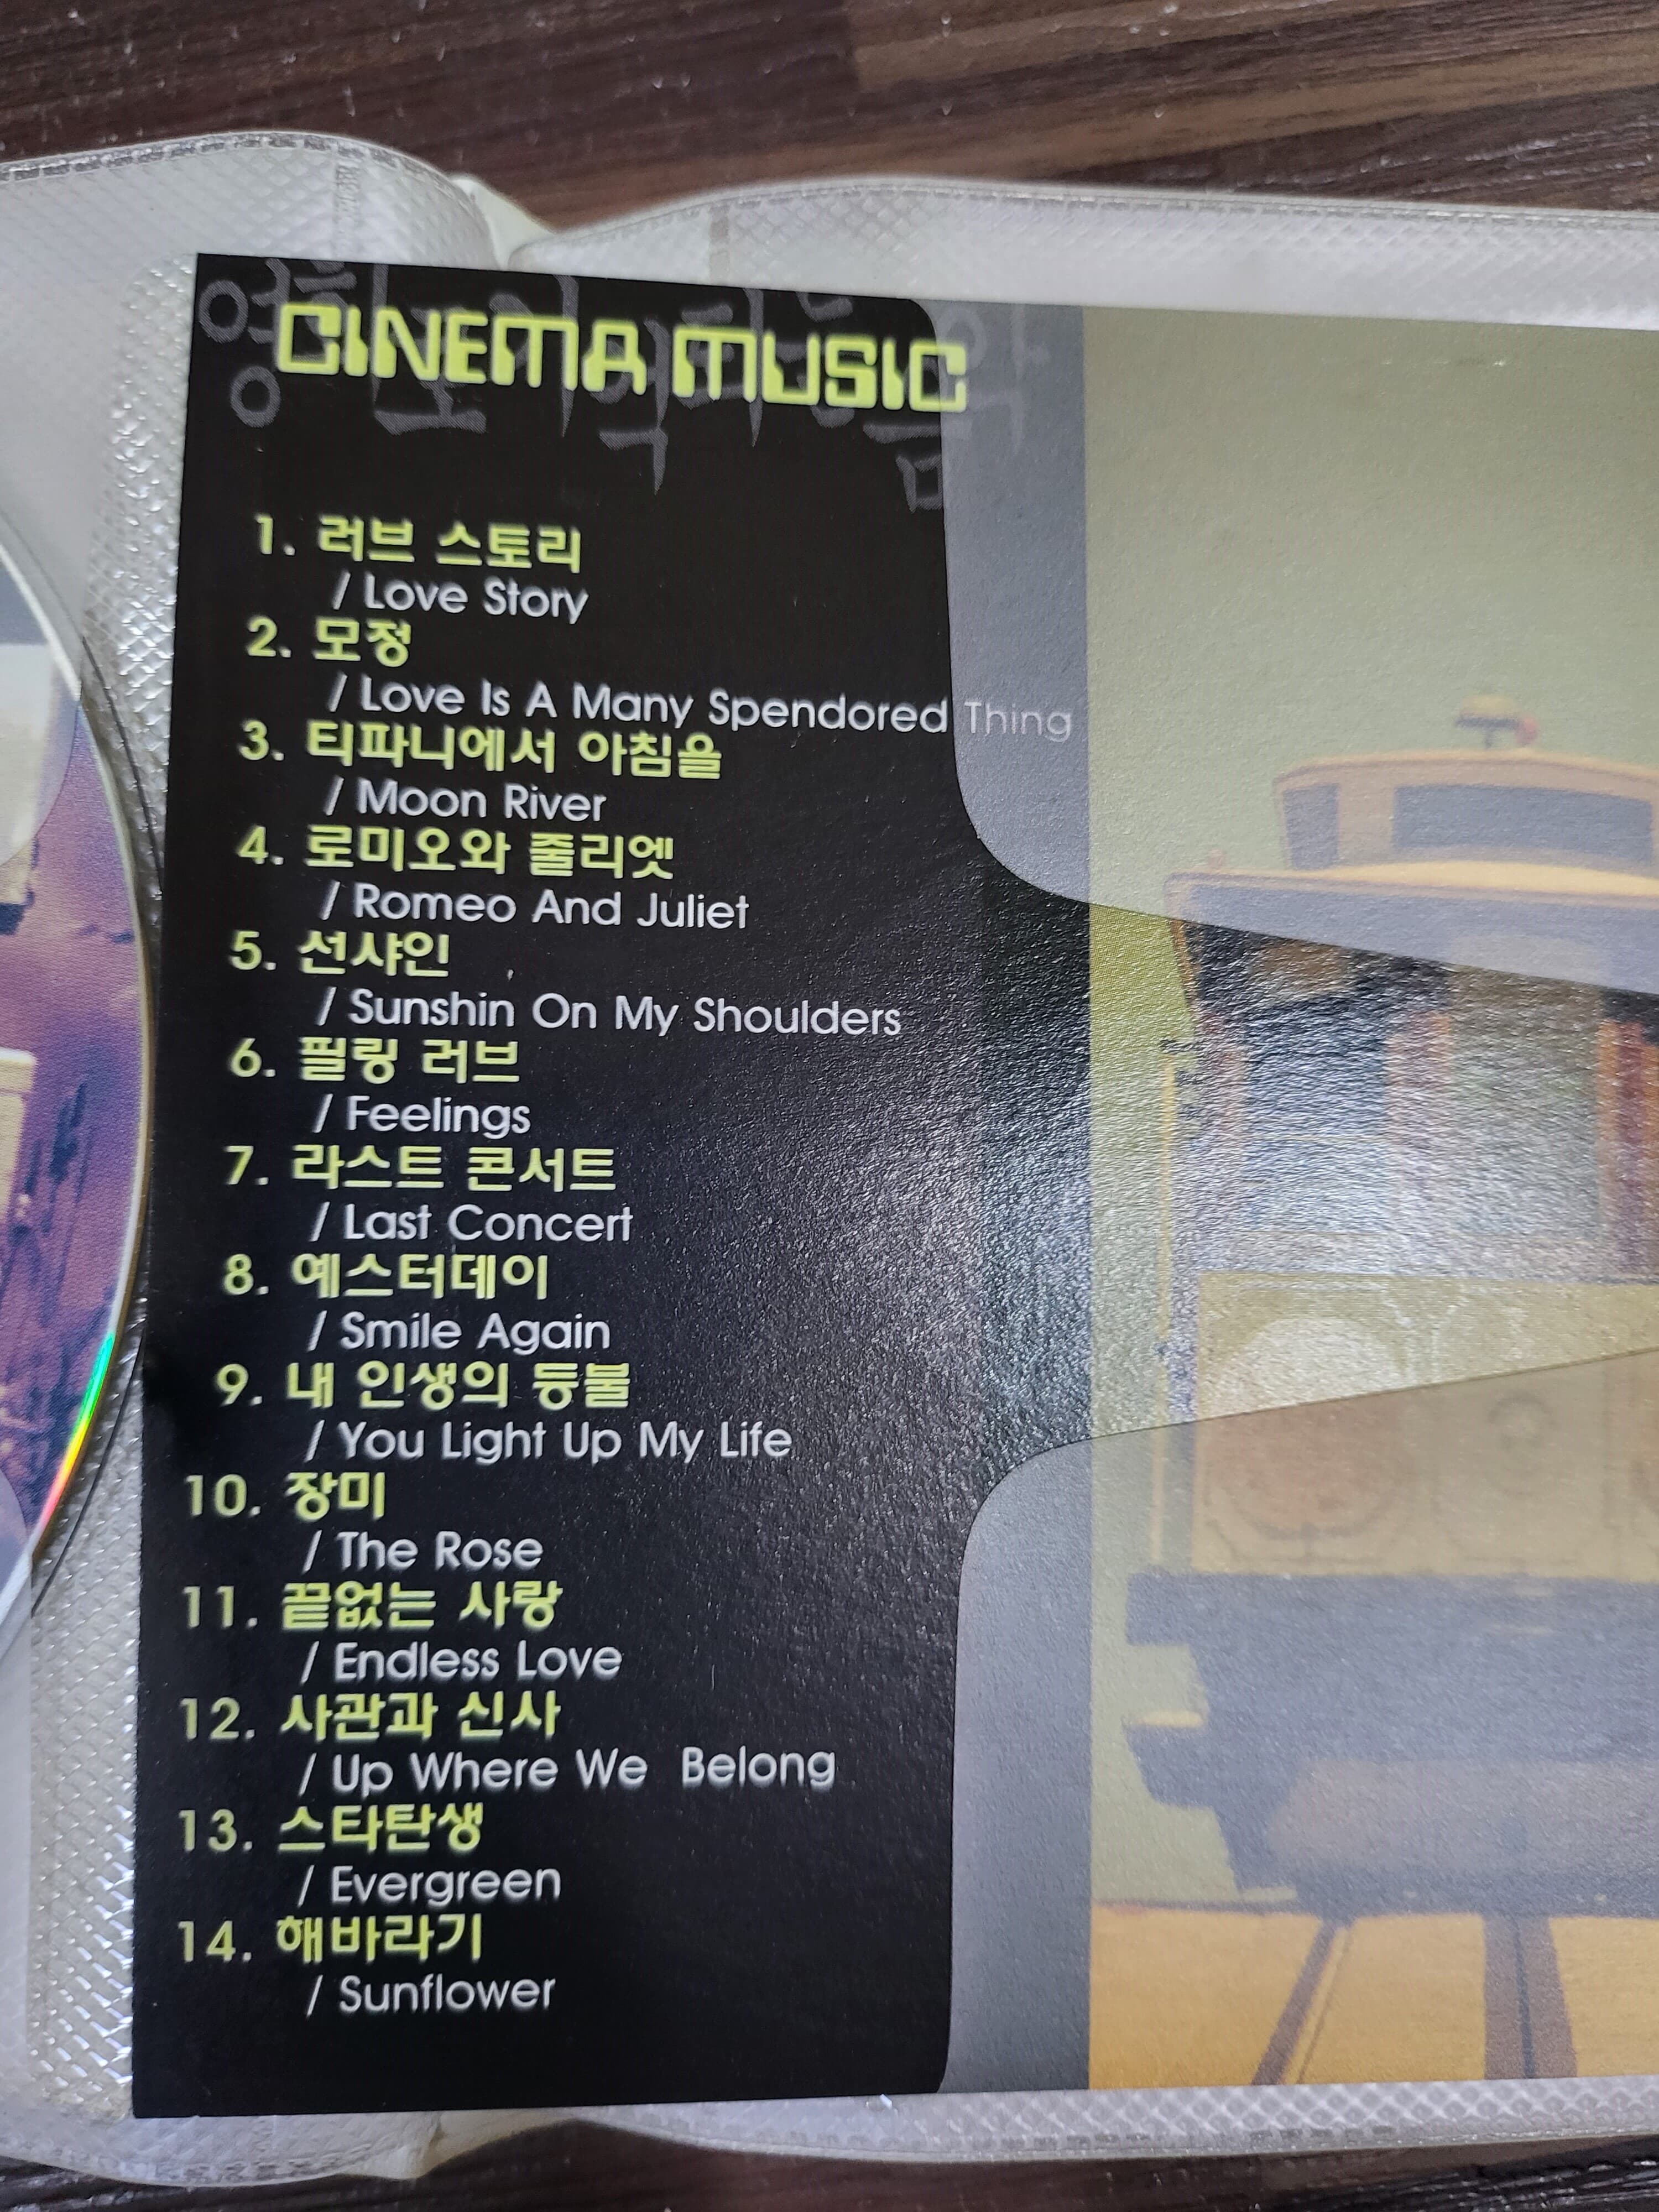 Cinema Music - 영화로 기억되는 음악 6 CD